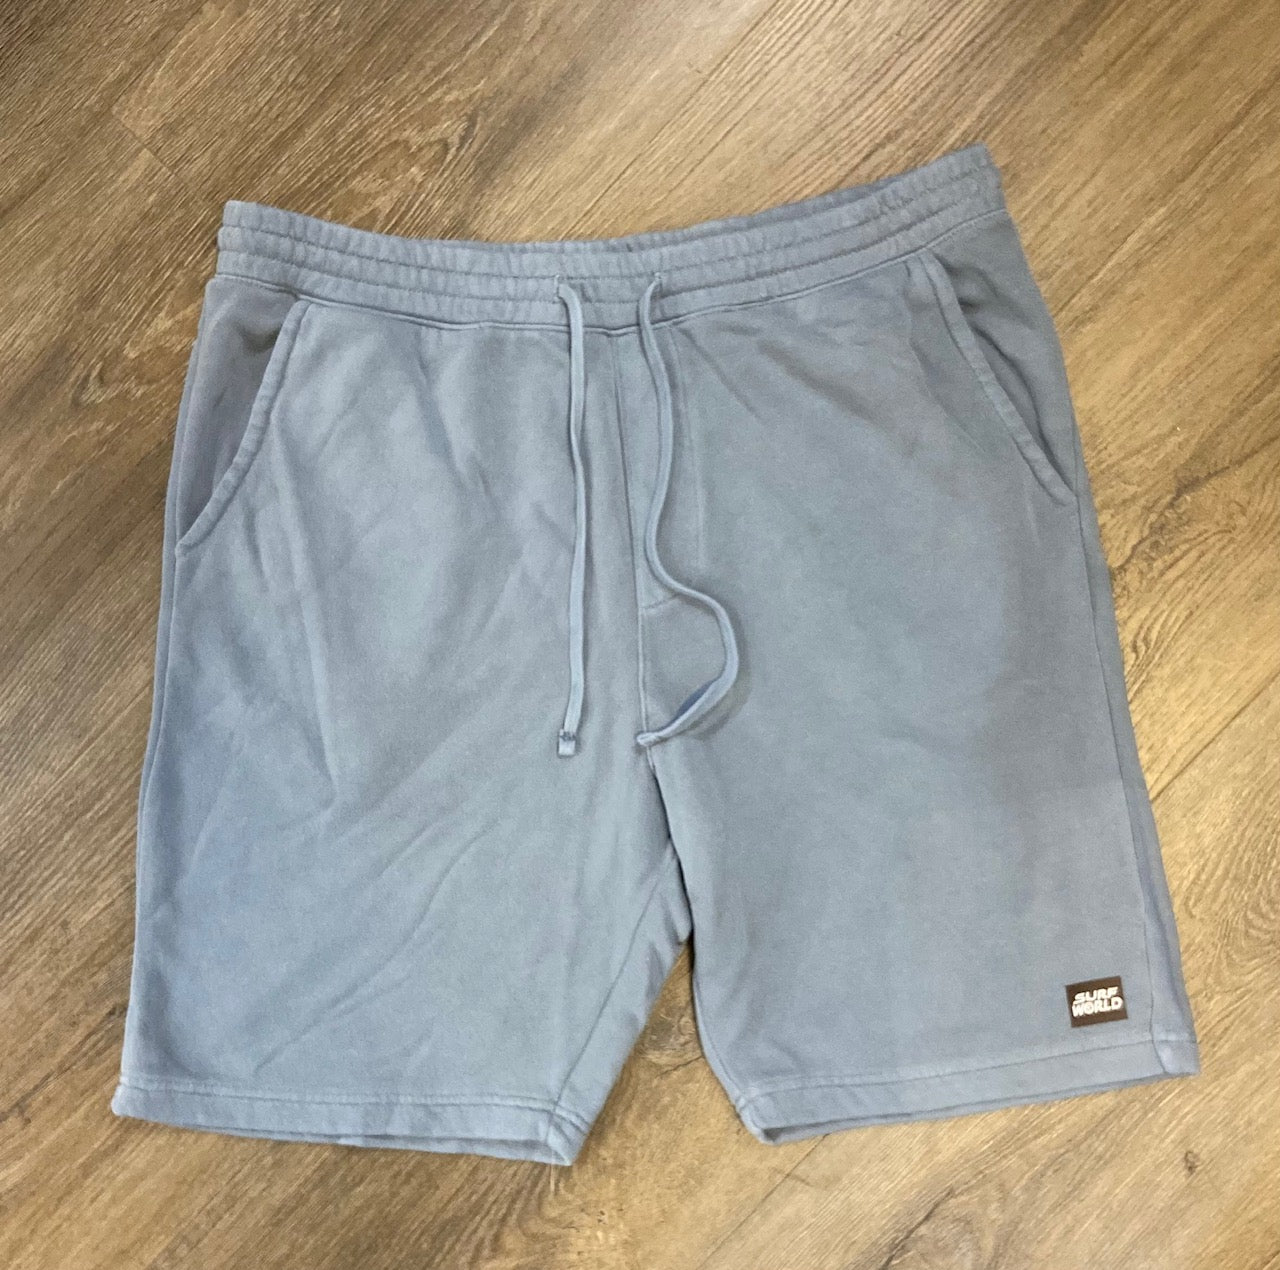 Surfworld Pigment Dyed Fleece Shorts - Slate Blue Mens Shorts